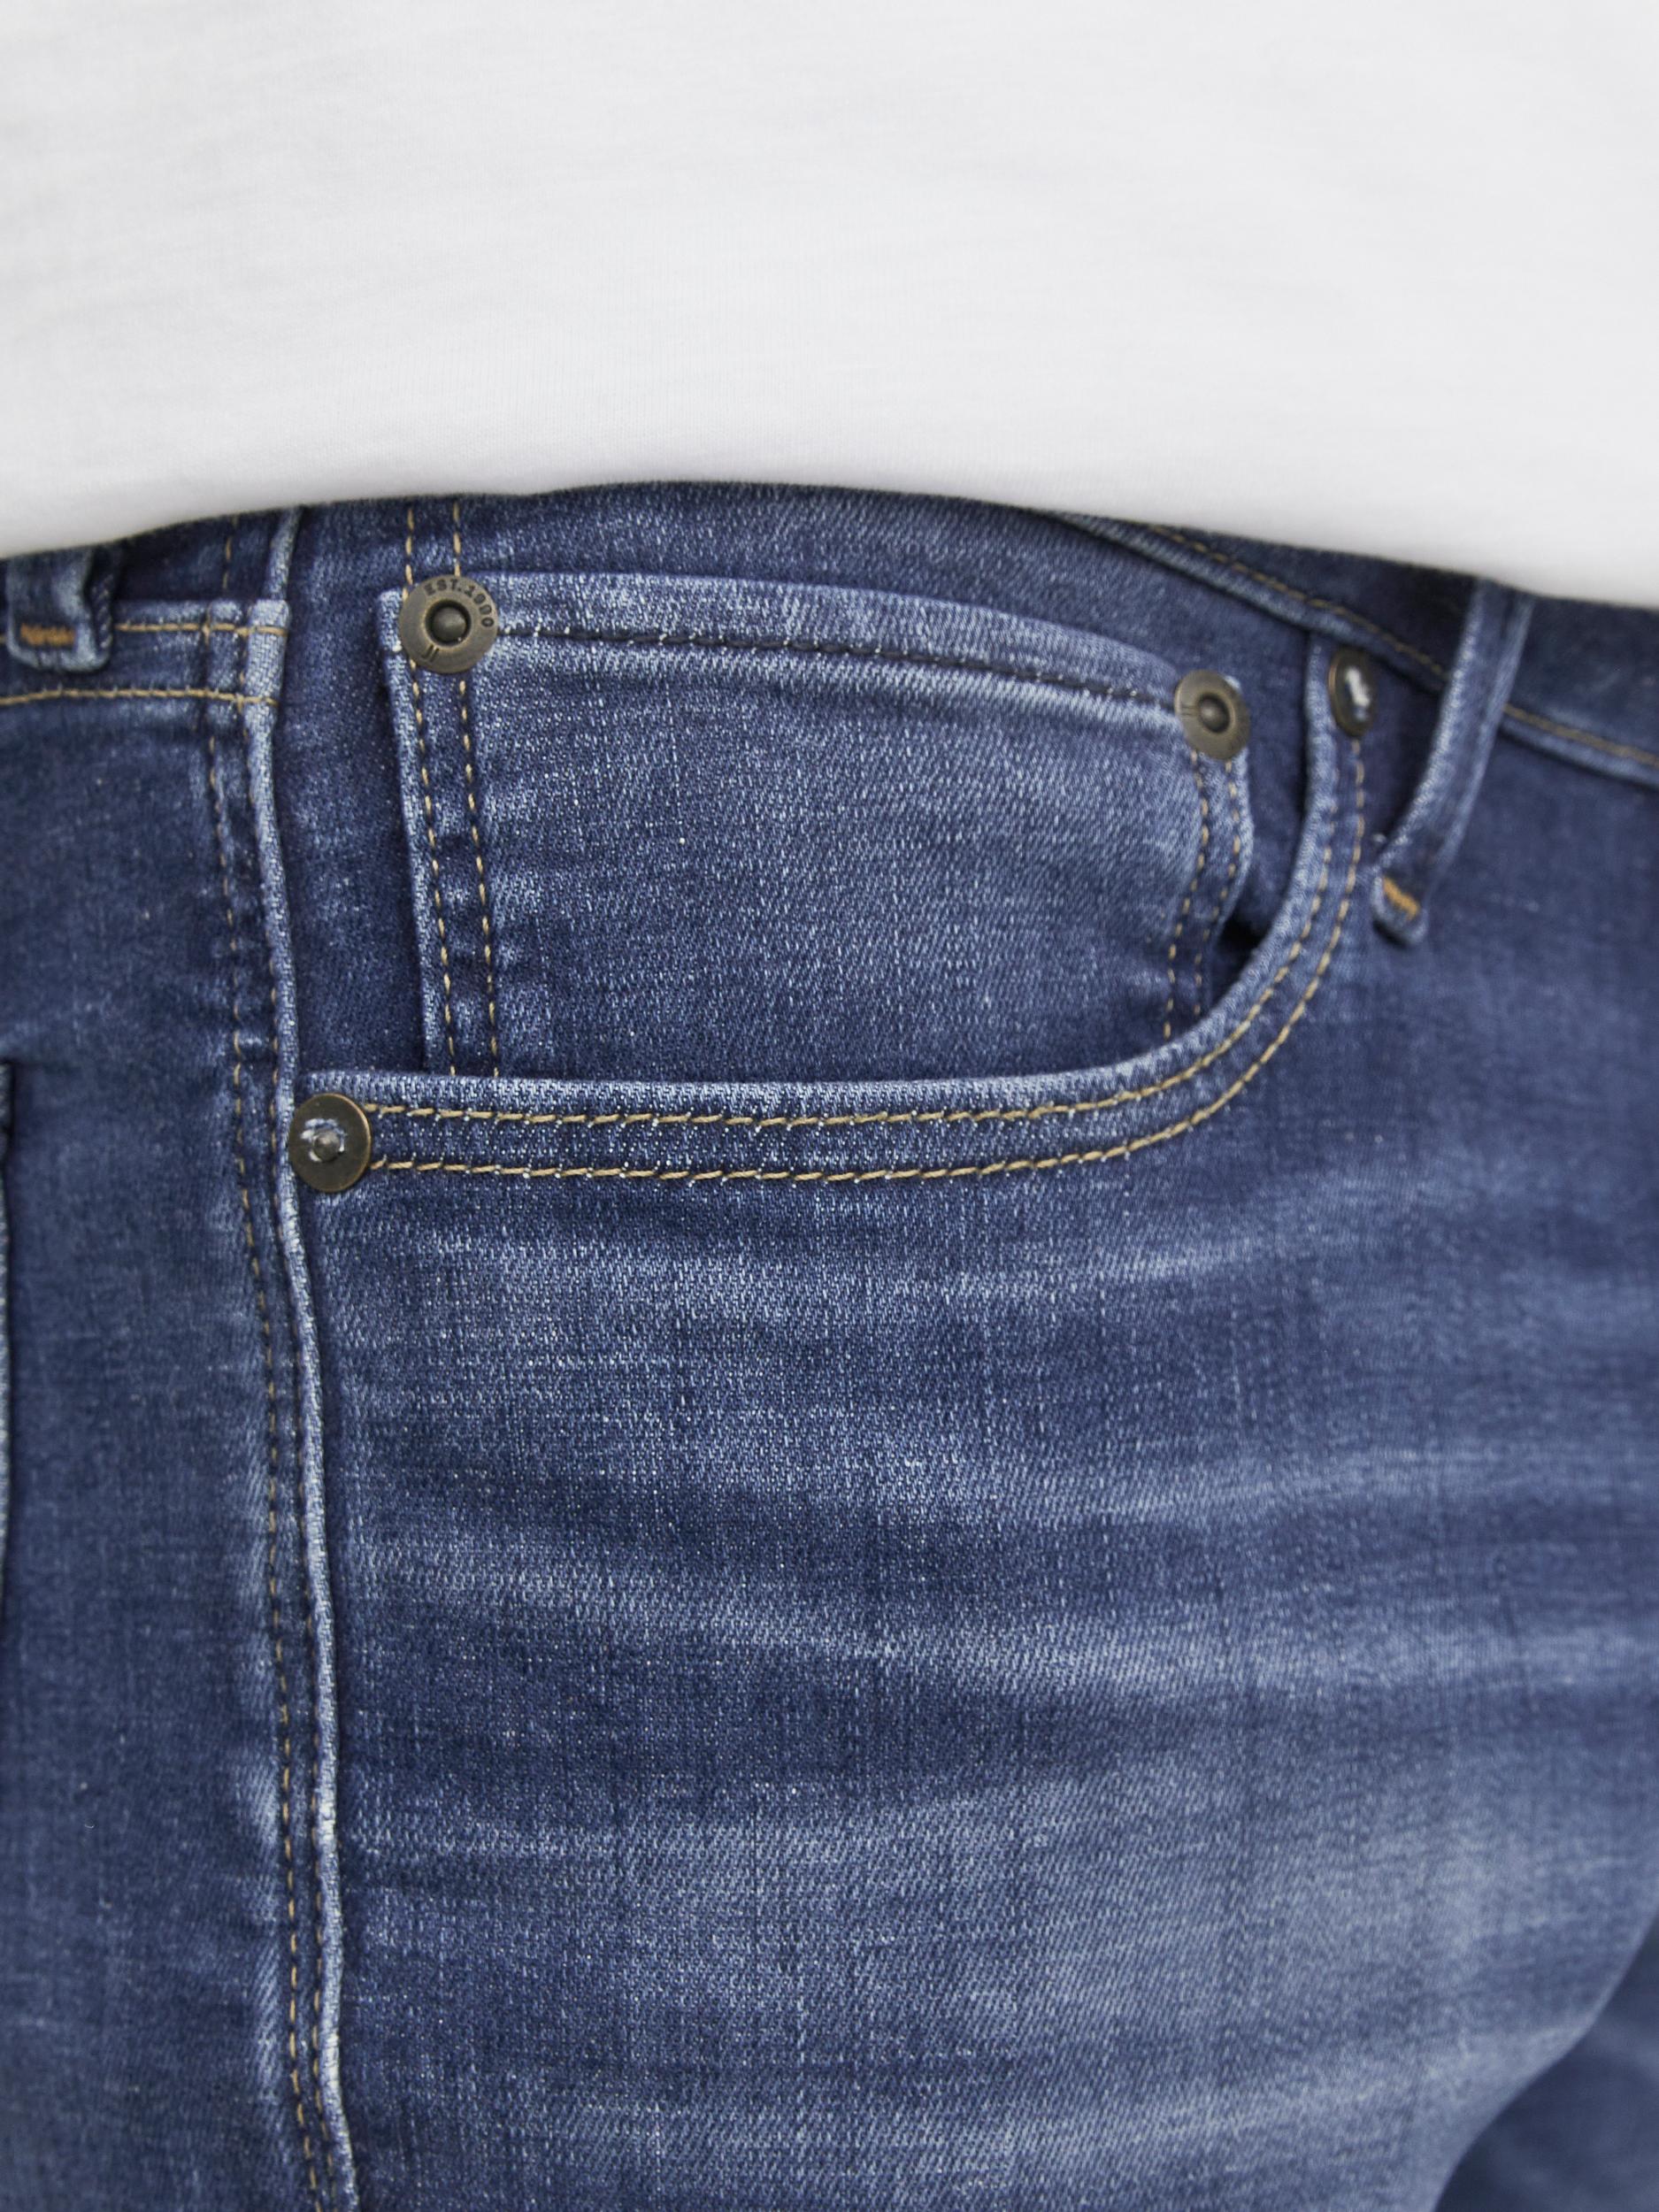 Men's Glenn Icon 659 Slim Fit Jean-Blue Denim-Front Pocket View